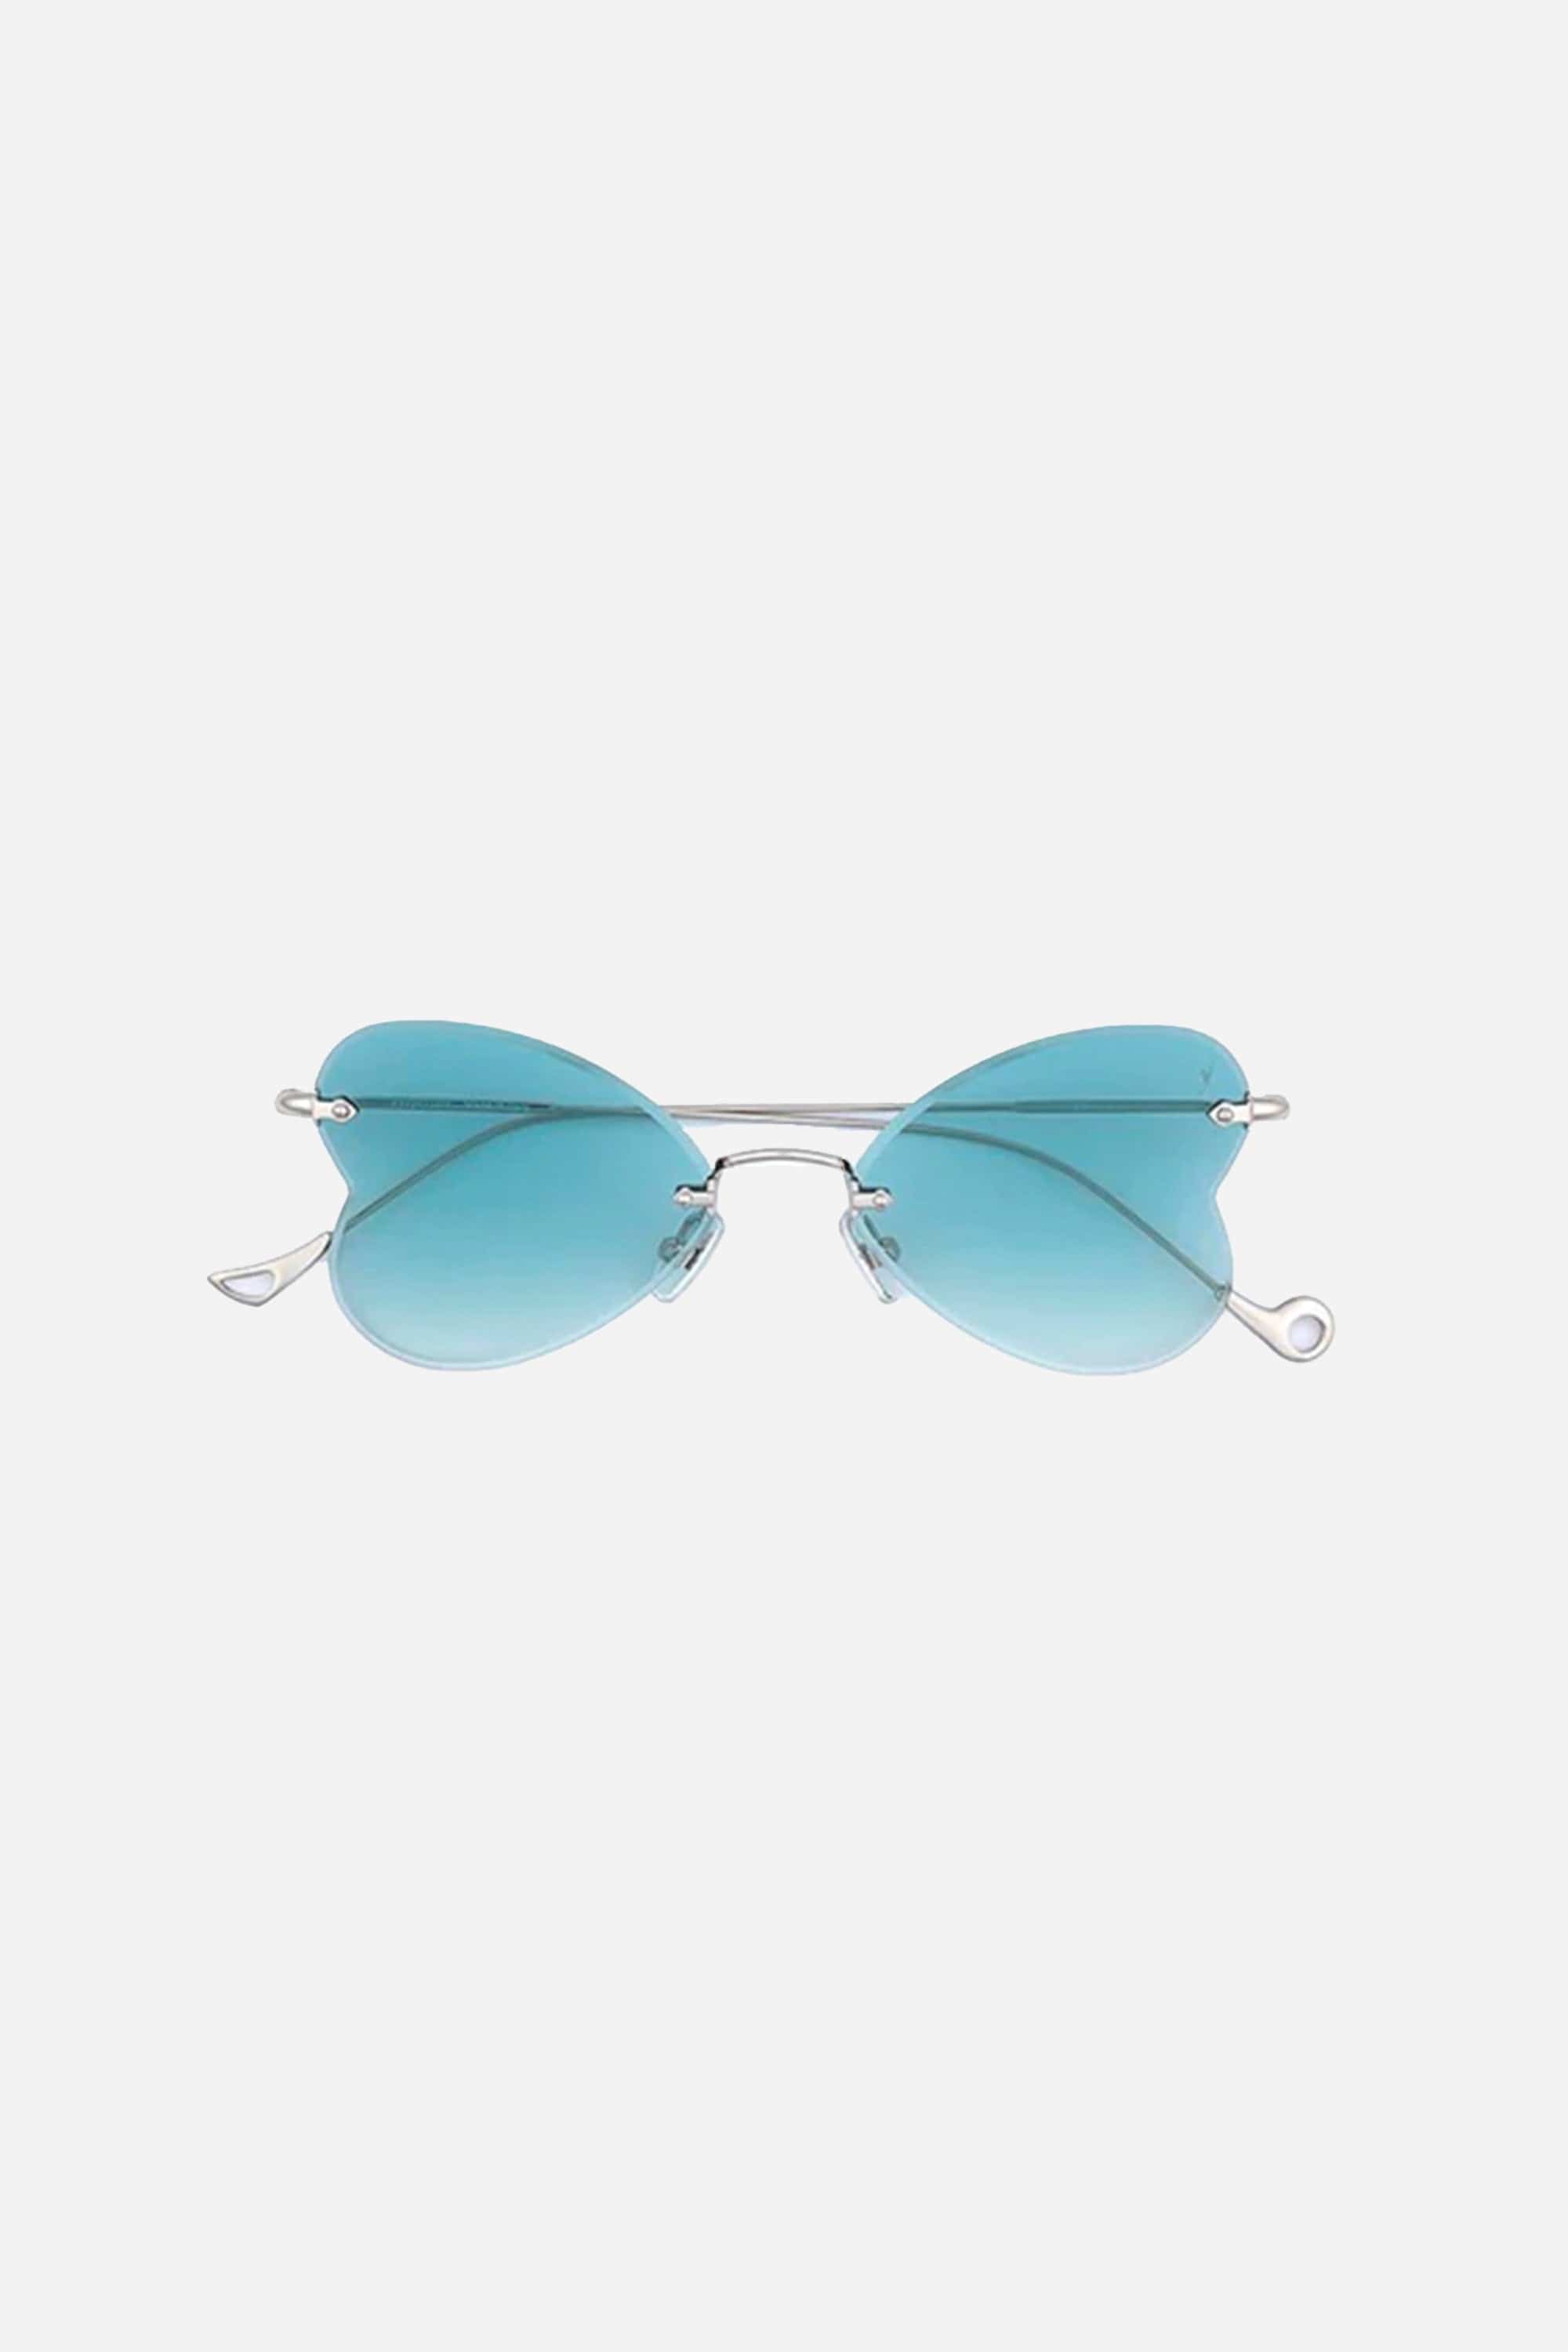 Eyepetizer heart blue rimless sunglasses - Eyewear Club